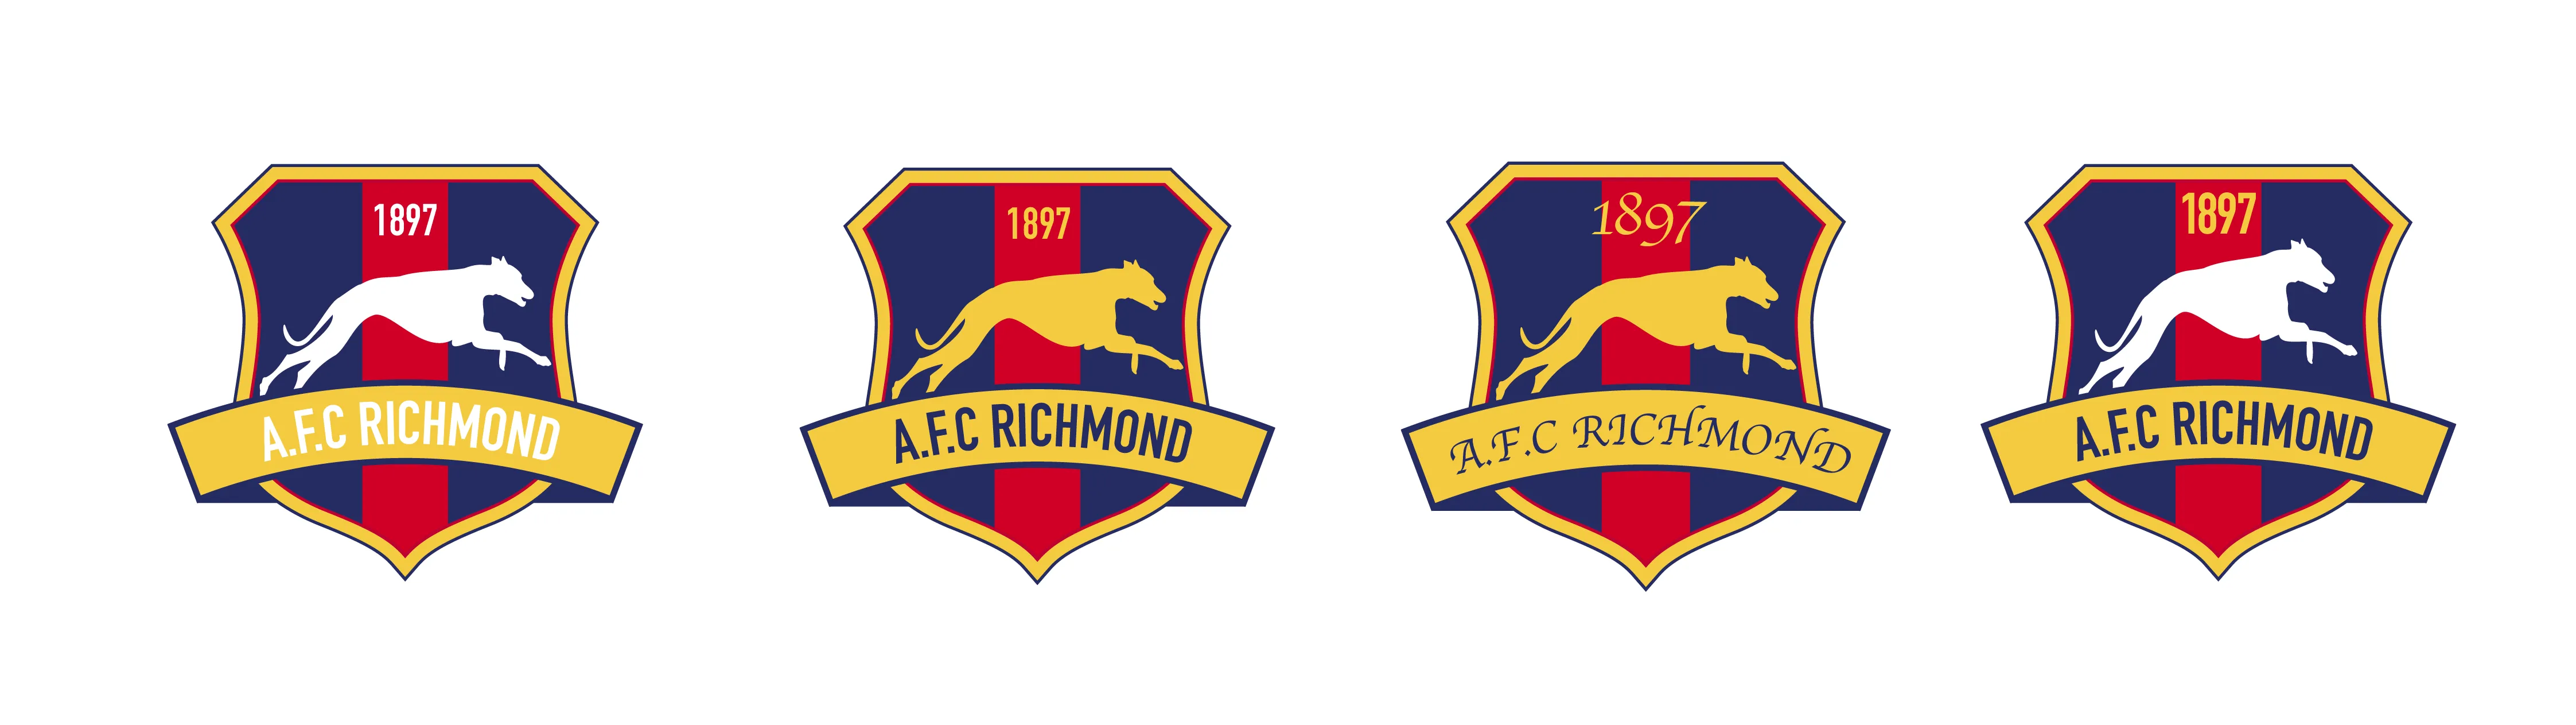 Designing the new AFC Richmond Club Badge